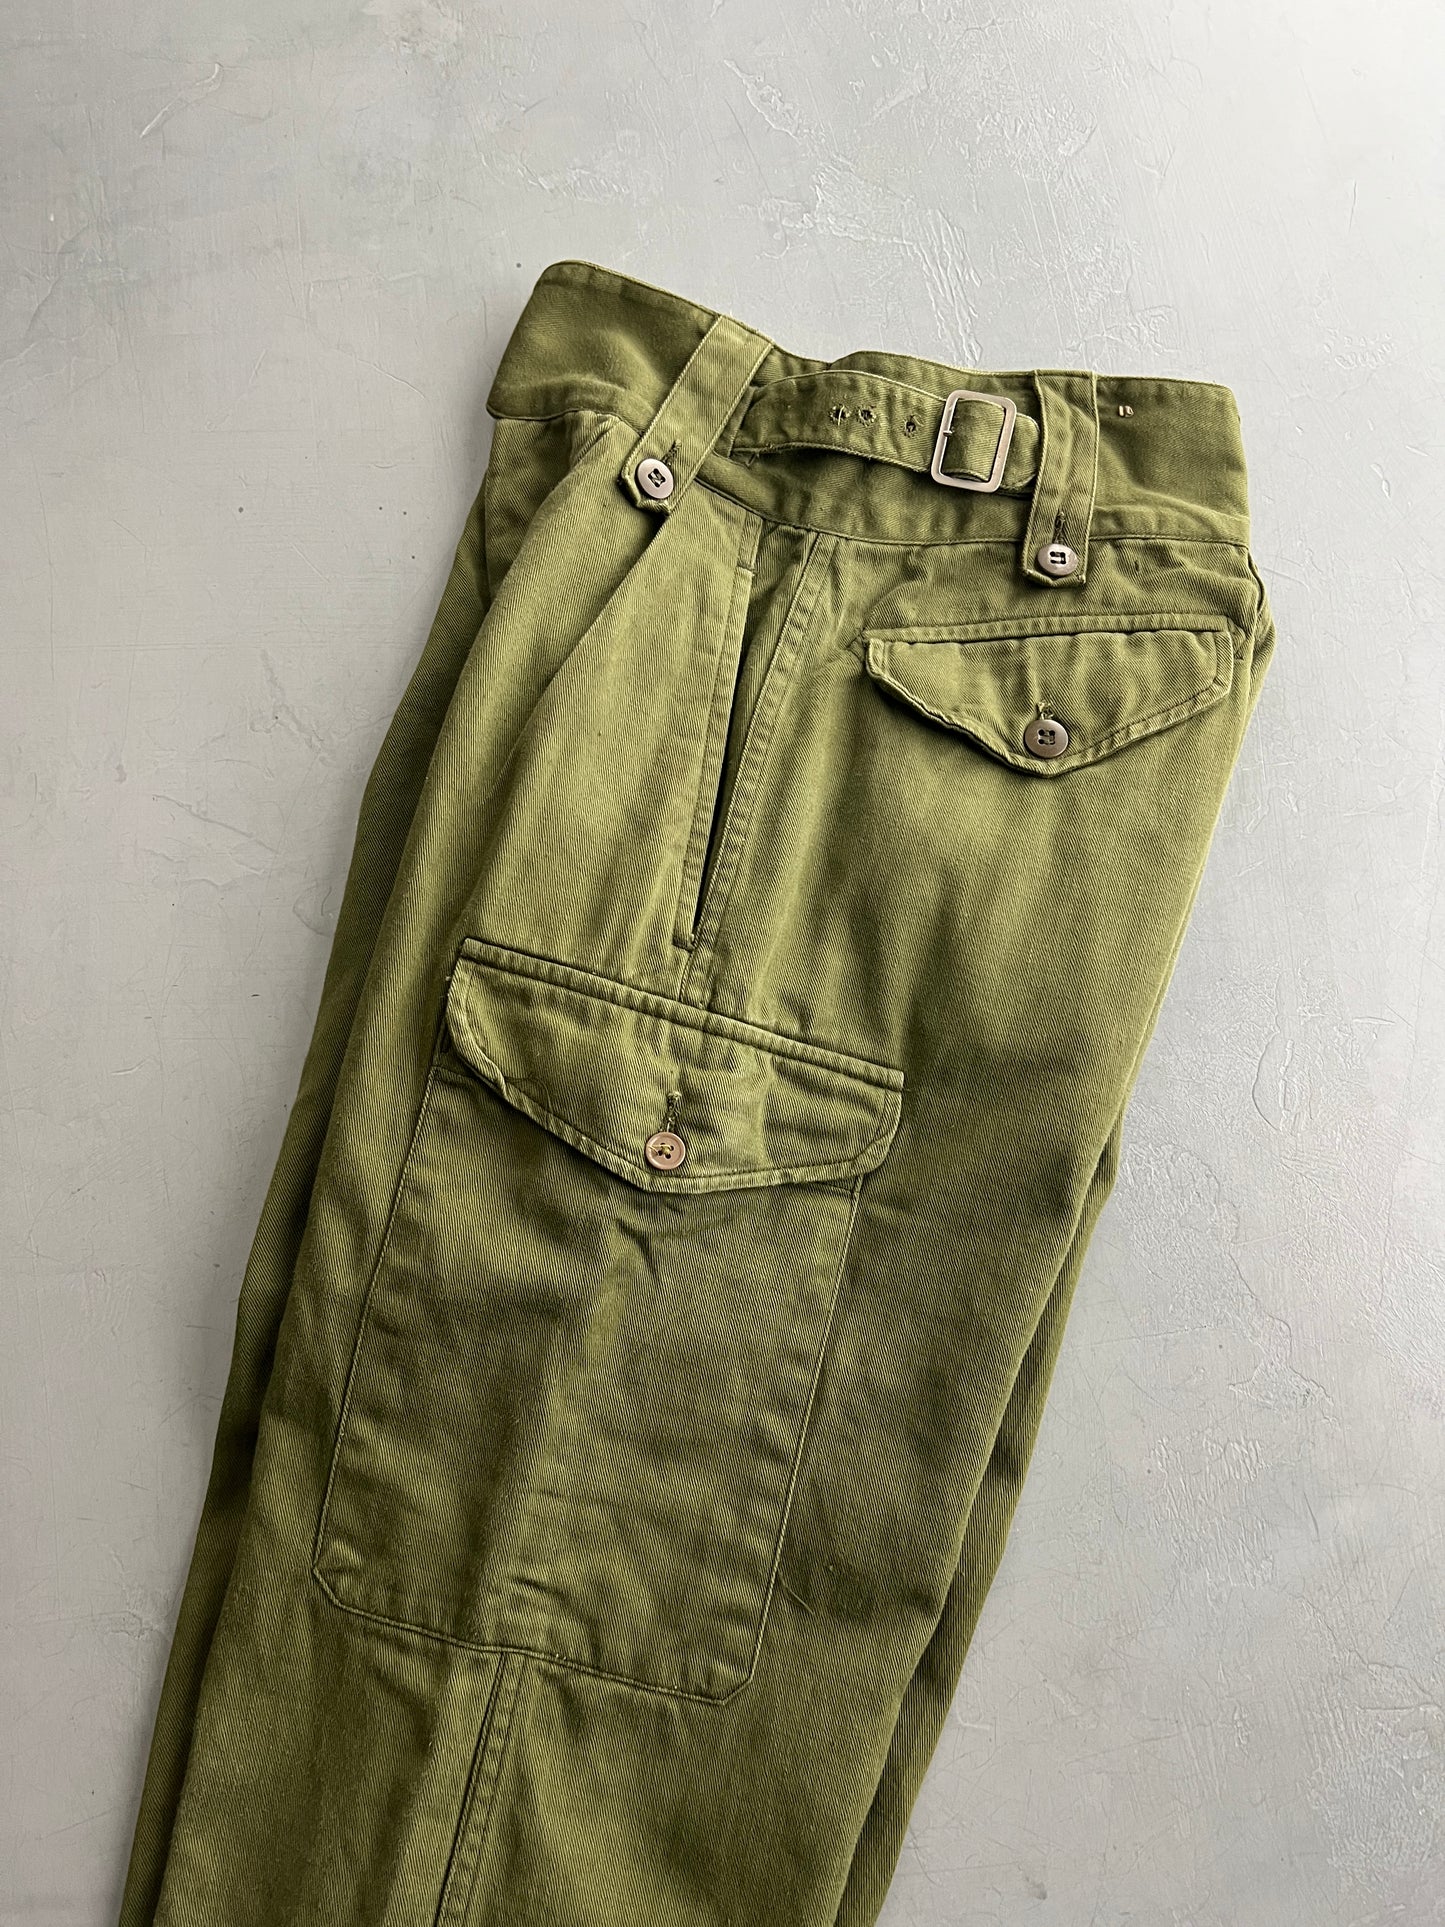 Aus Army Ghurka Pants [26]